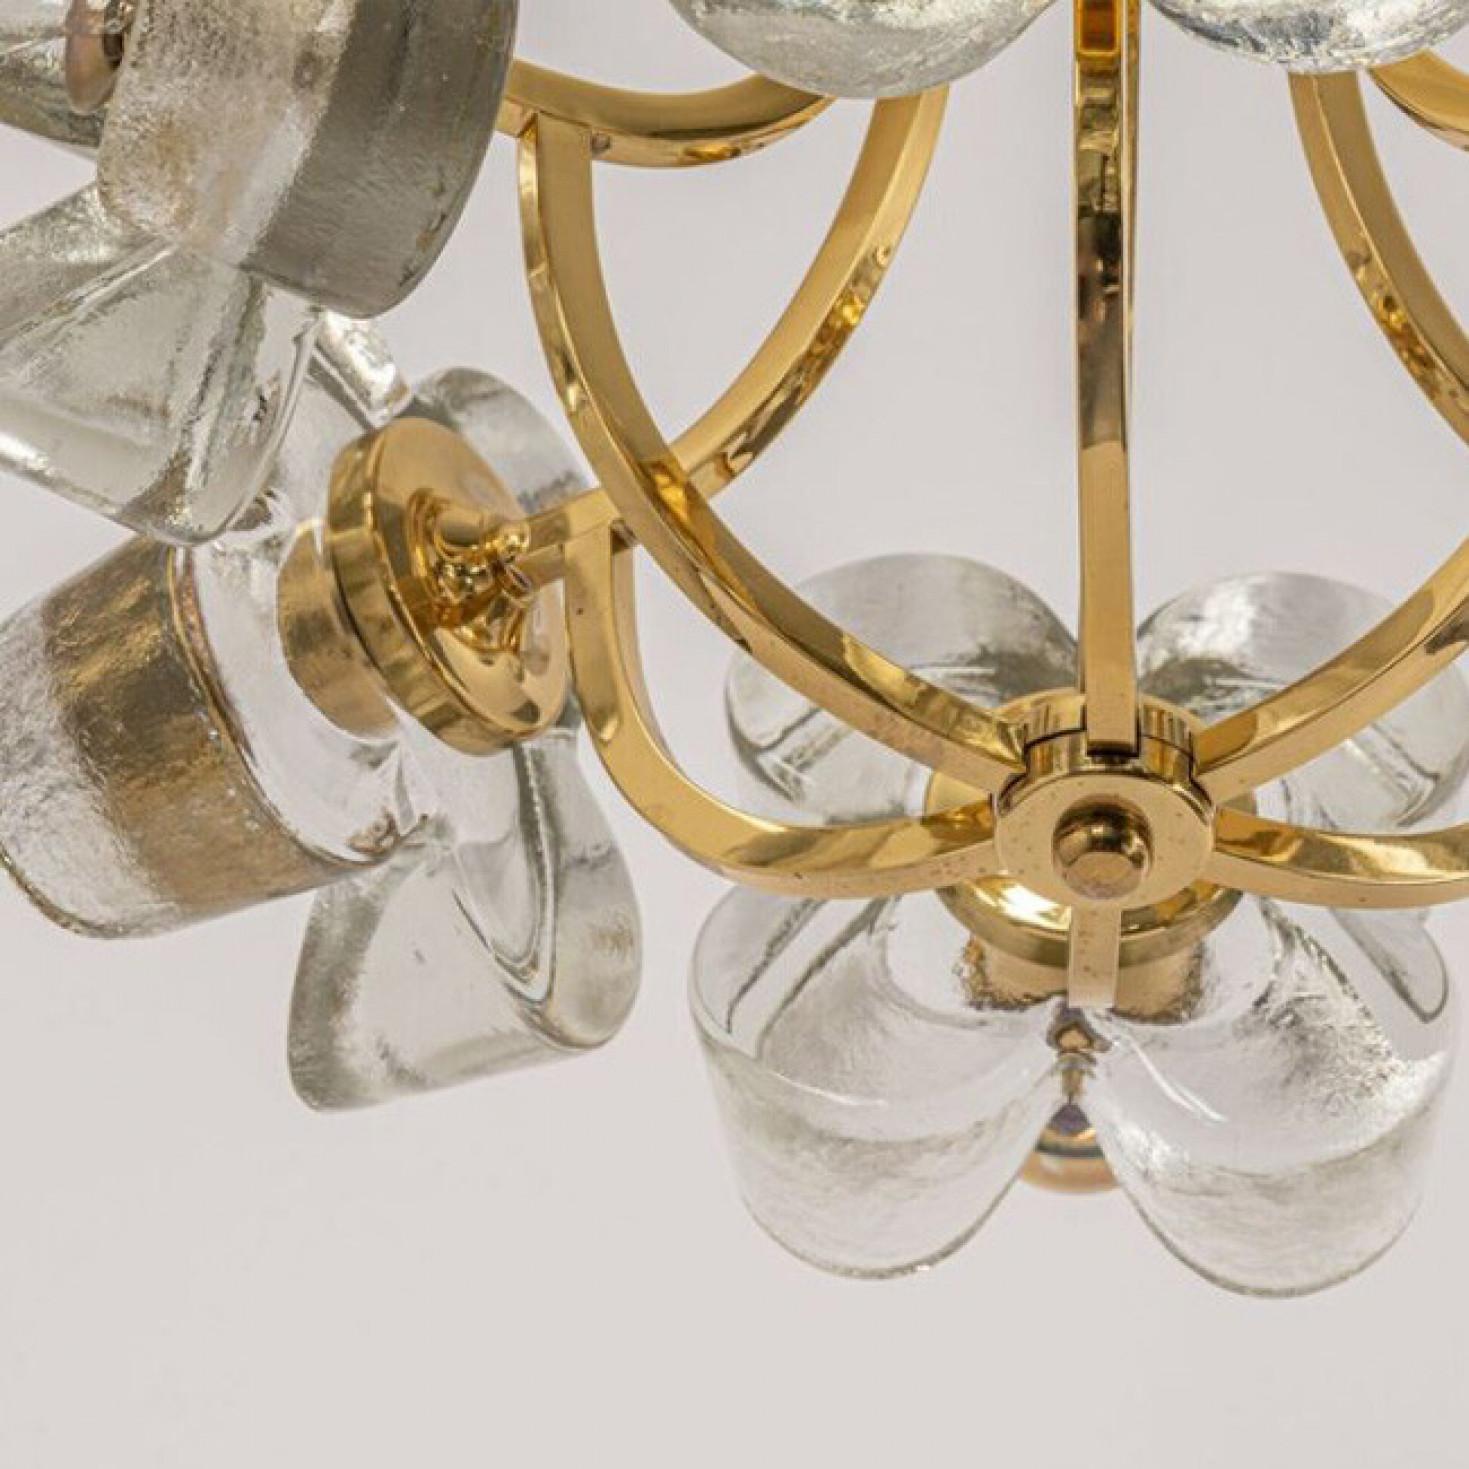 20th Century 1 of 2 Sische Glass and Brass Chandelier, 1960s Modernist Design, Kalmar Style For Sale